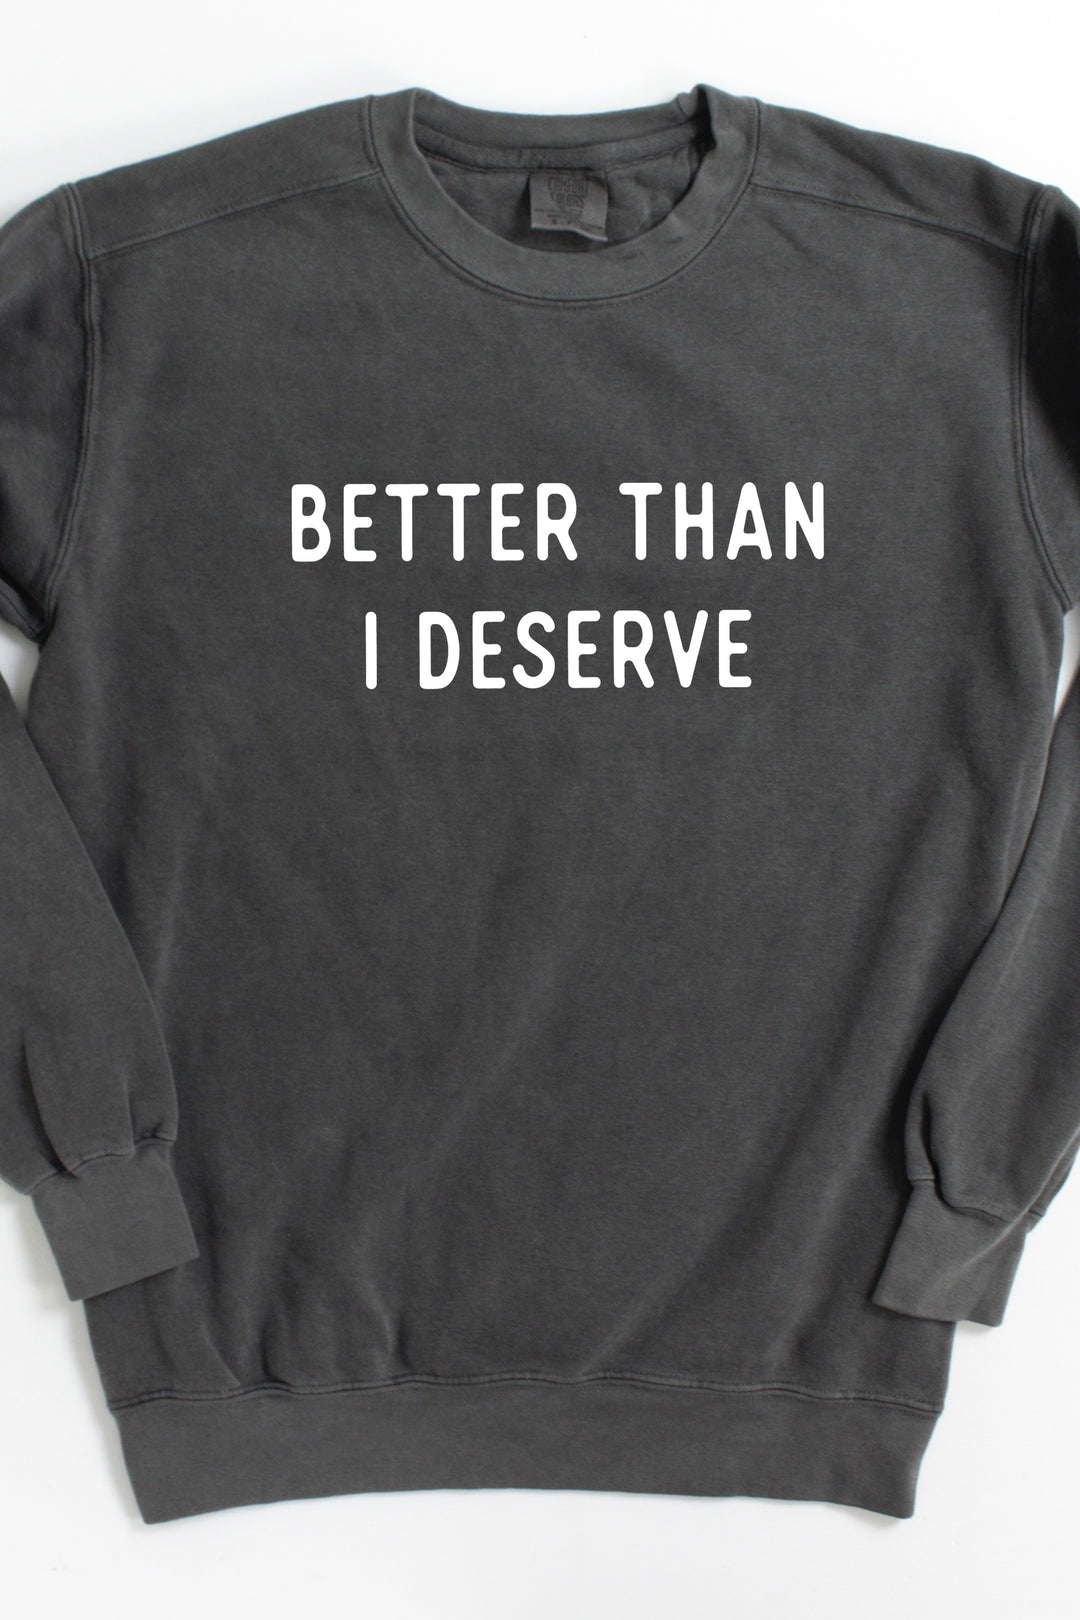 "Better Than I Deserve" Minimal Crewneck Pullover